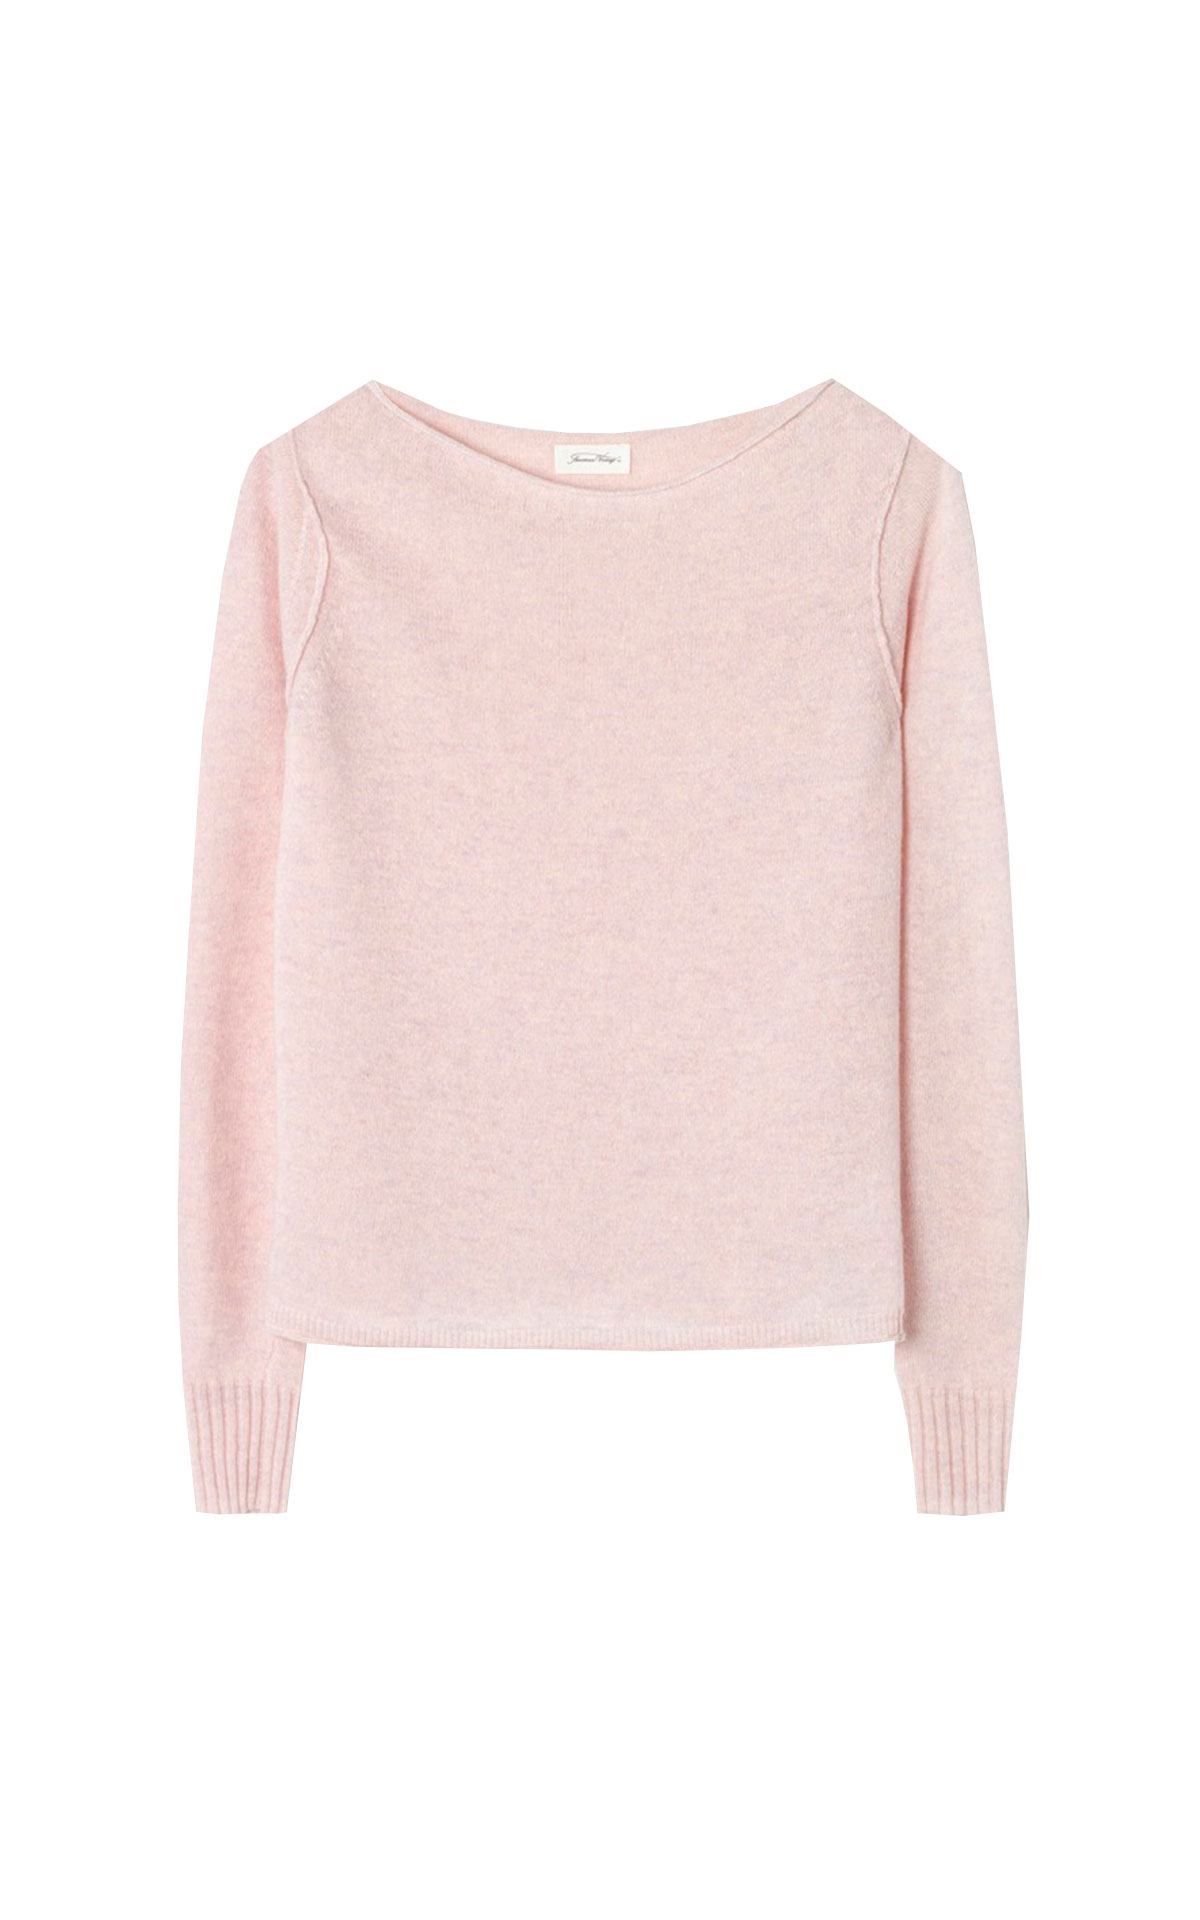 Pink American Vintage sweater